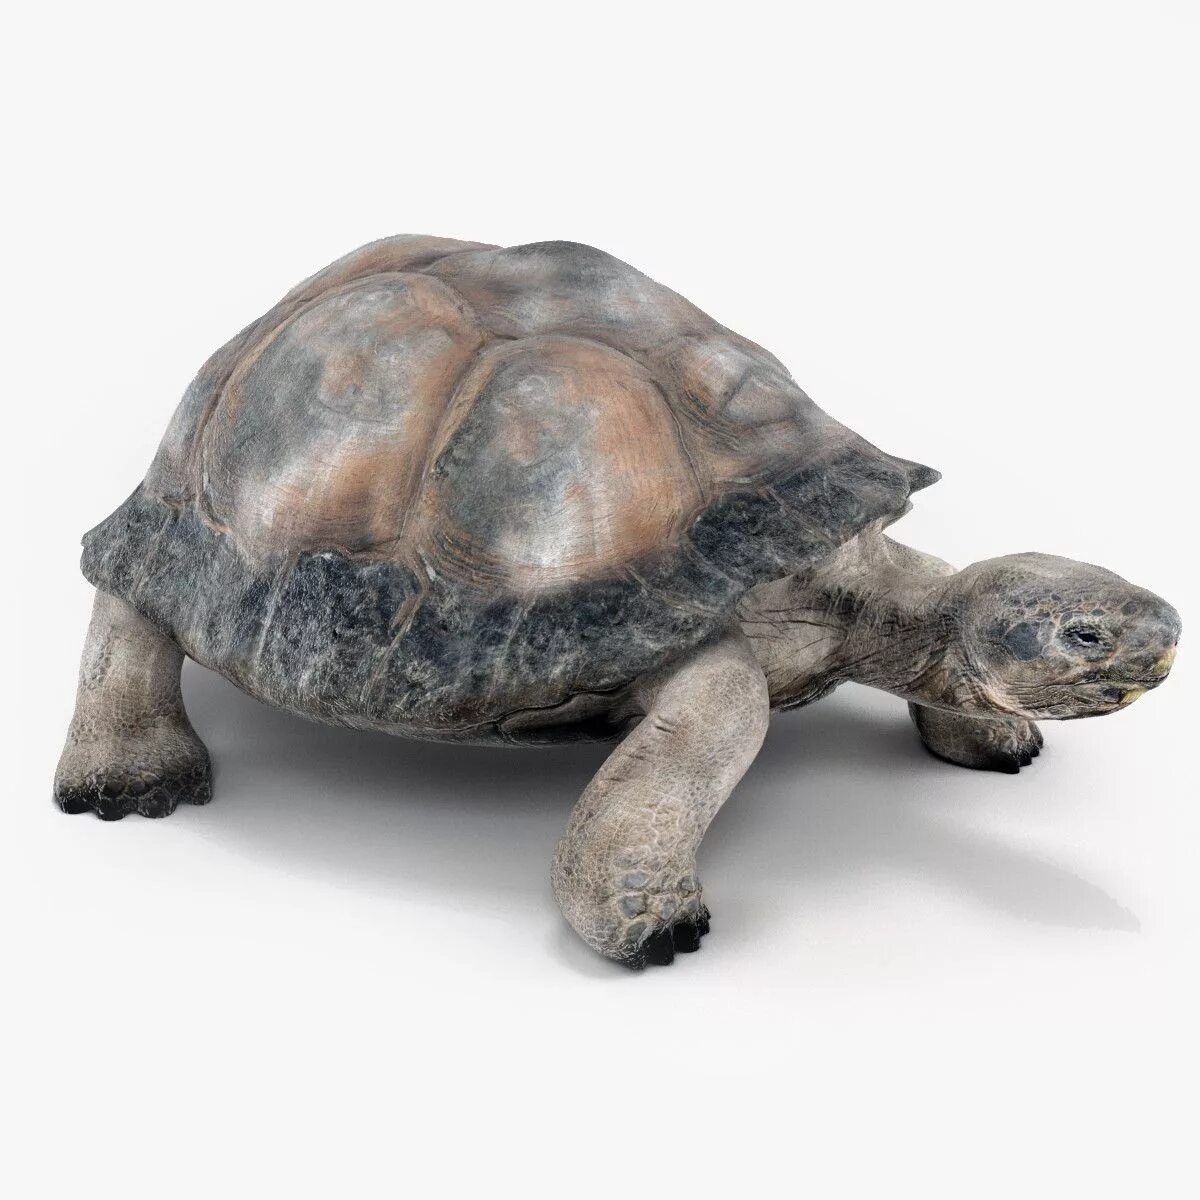 Мод черепаха. Игрушка Tortoise 3d черепаха. Черепаха на белом фоне. Черепаха модель. Черепашки 3д.